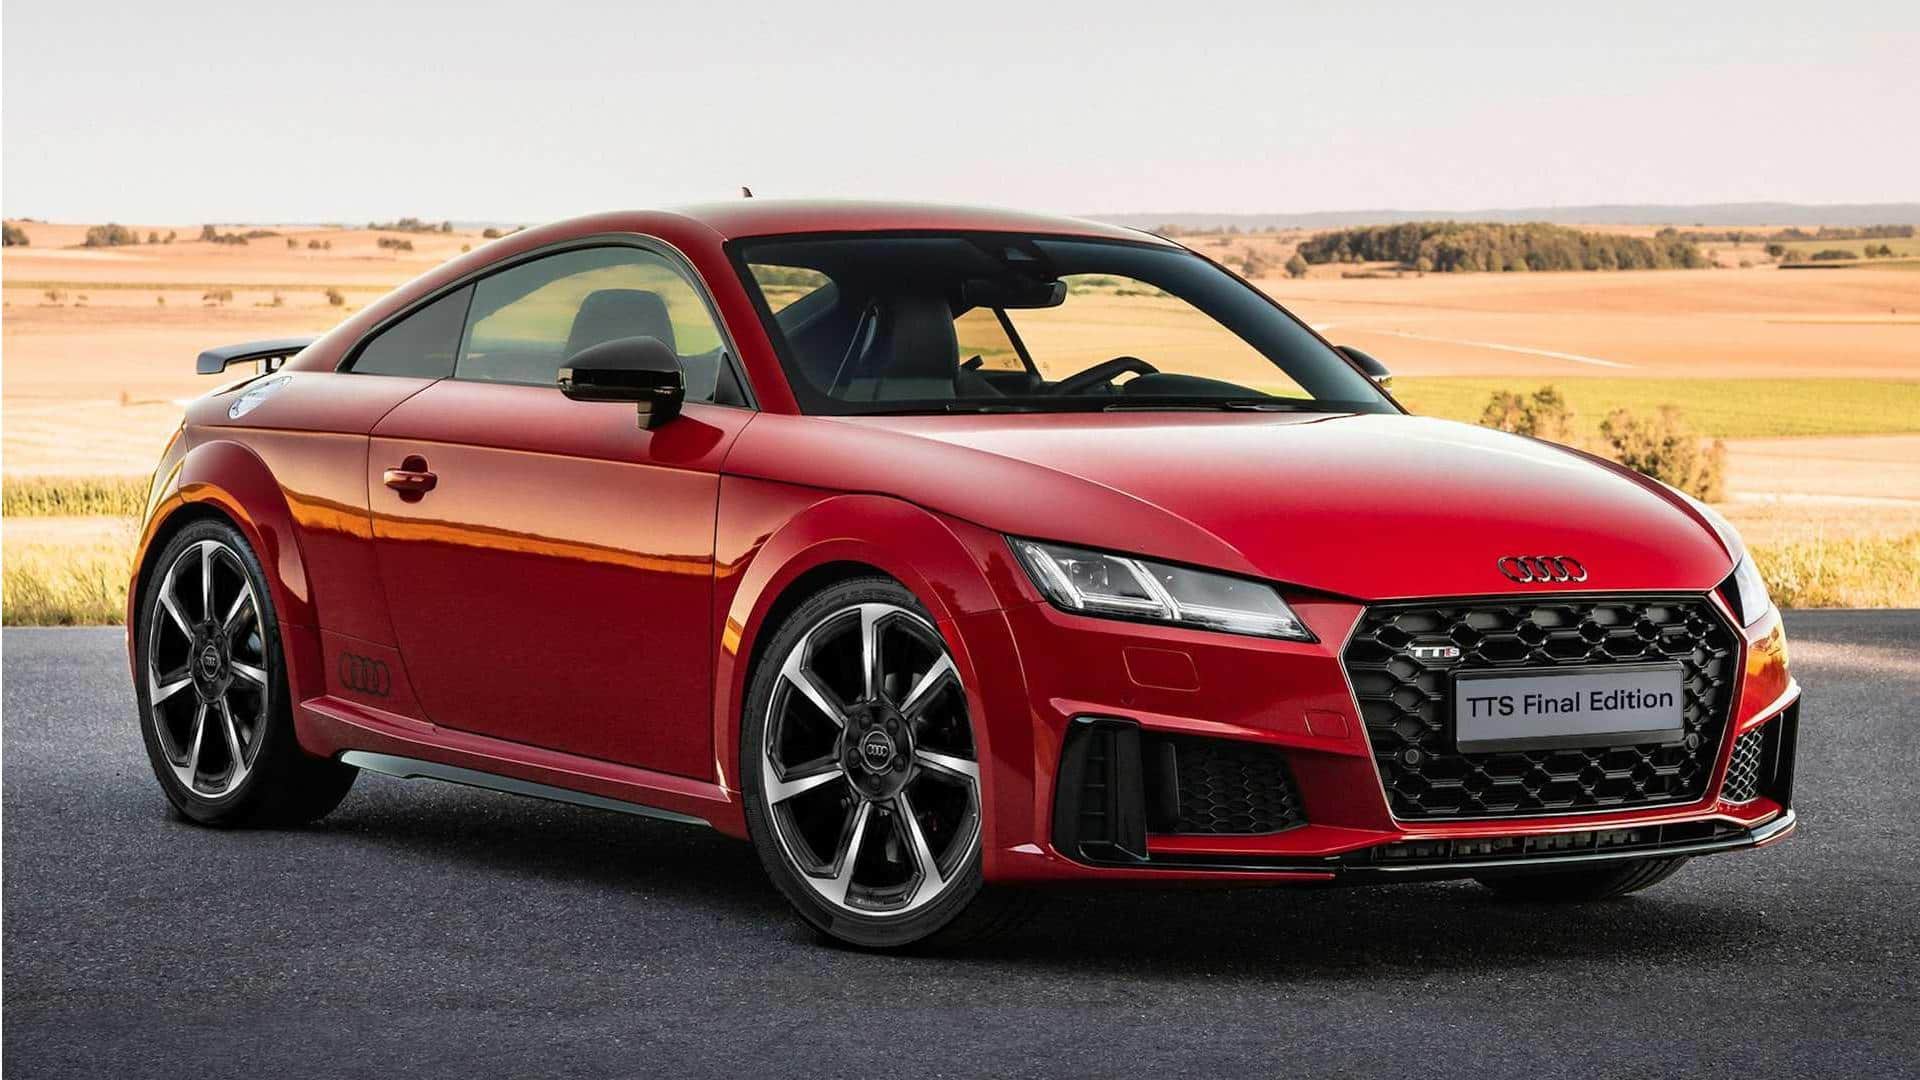 Audi bids adieu to TT moniker with Final Edition model